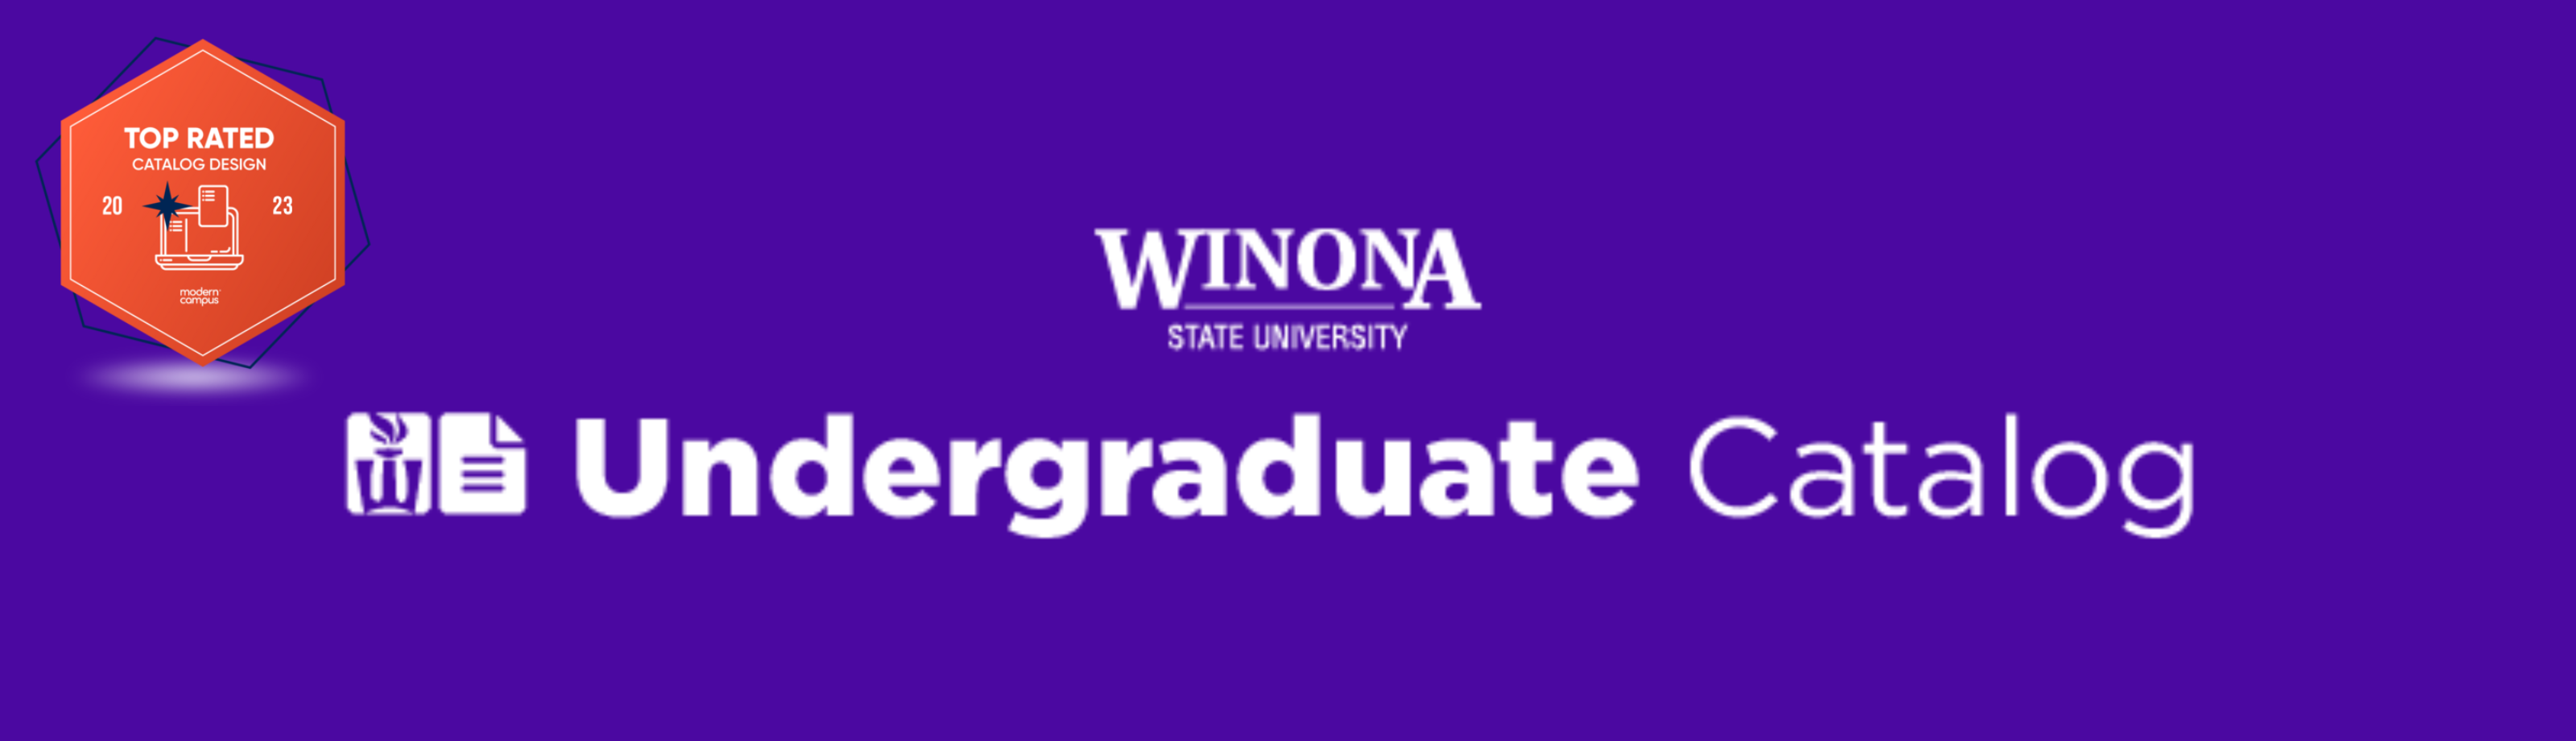 Graduate Catalog Banner Image